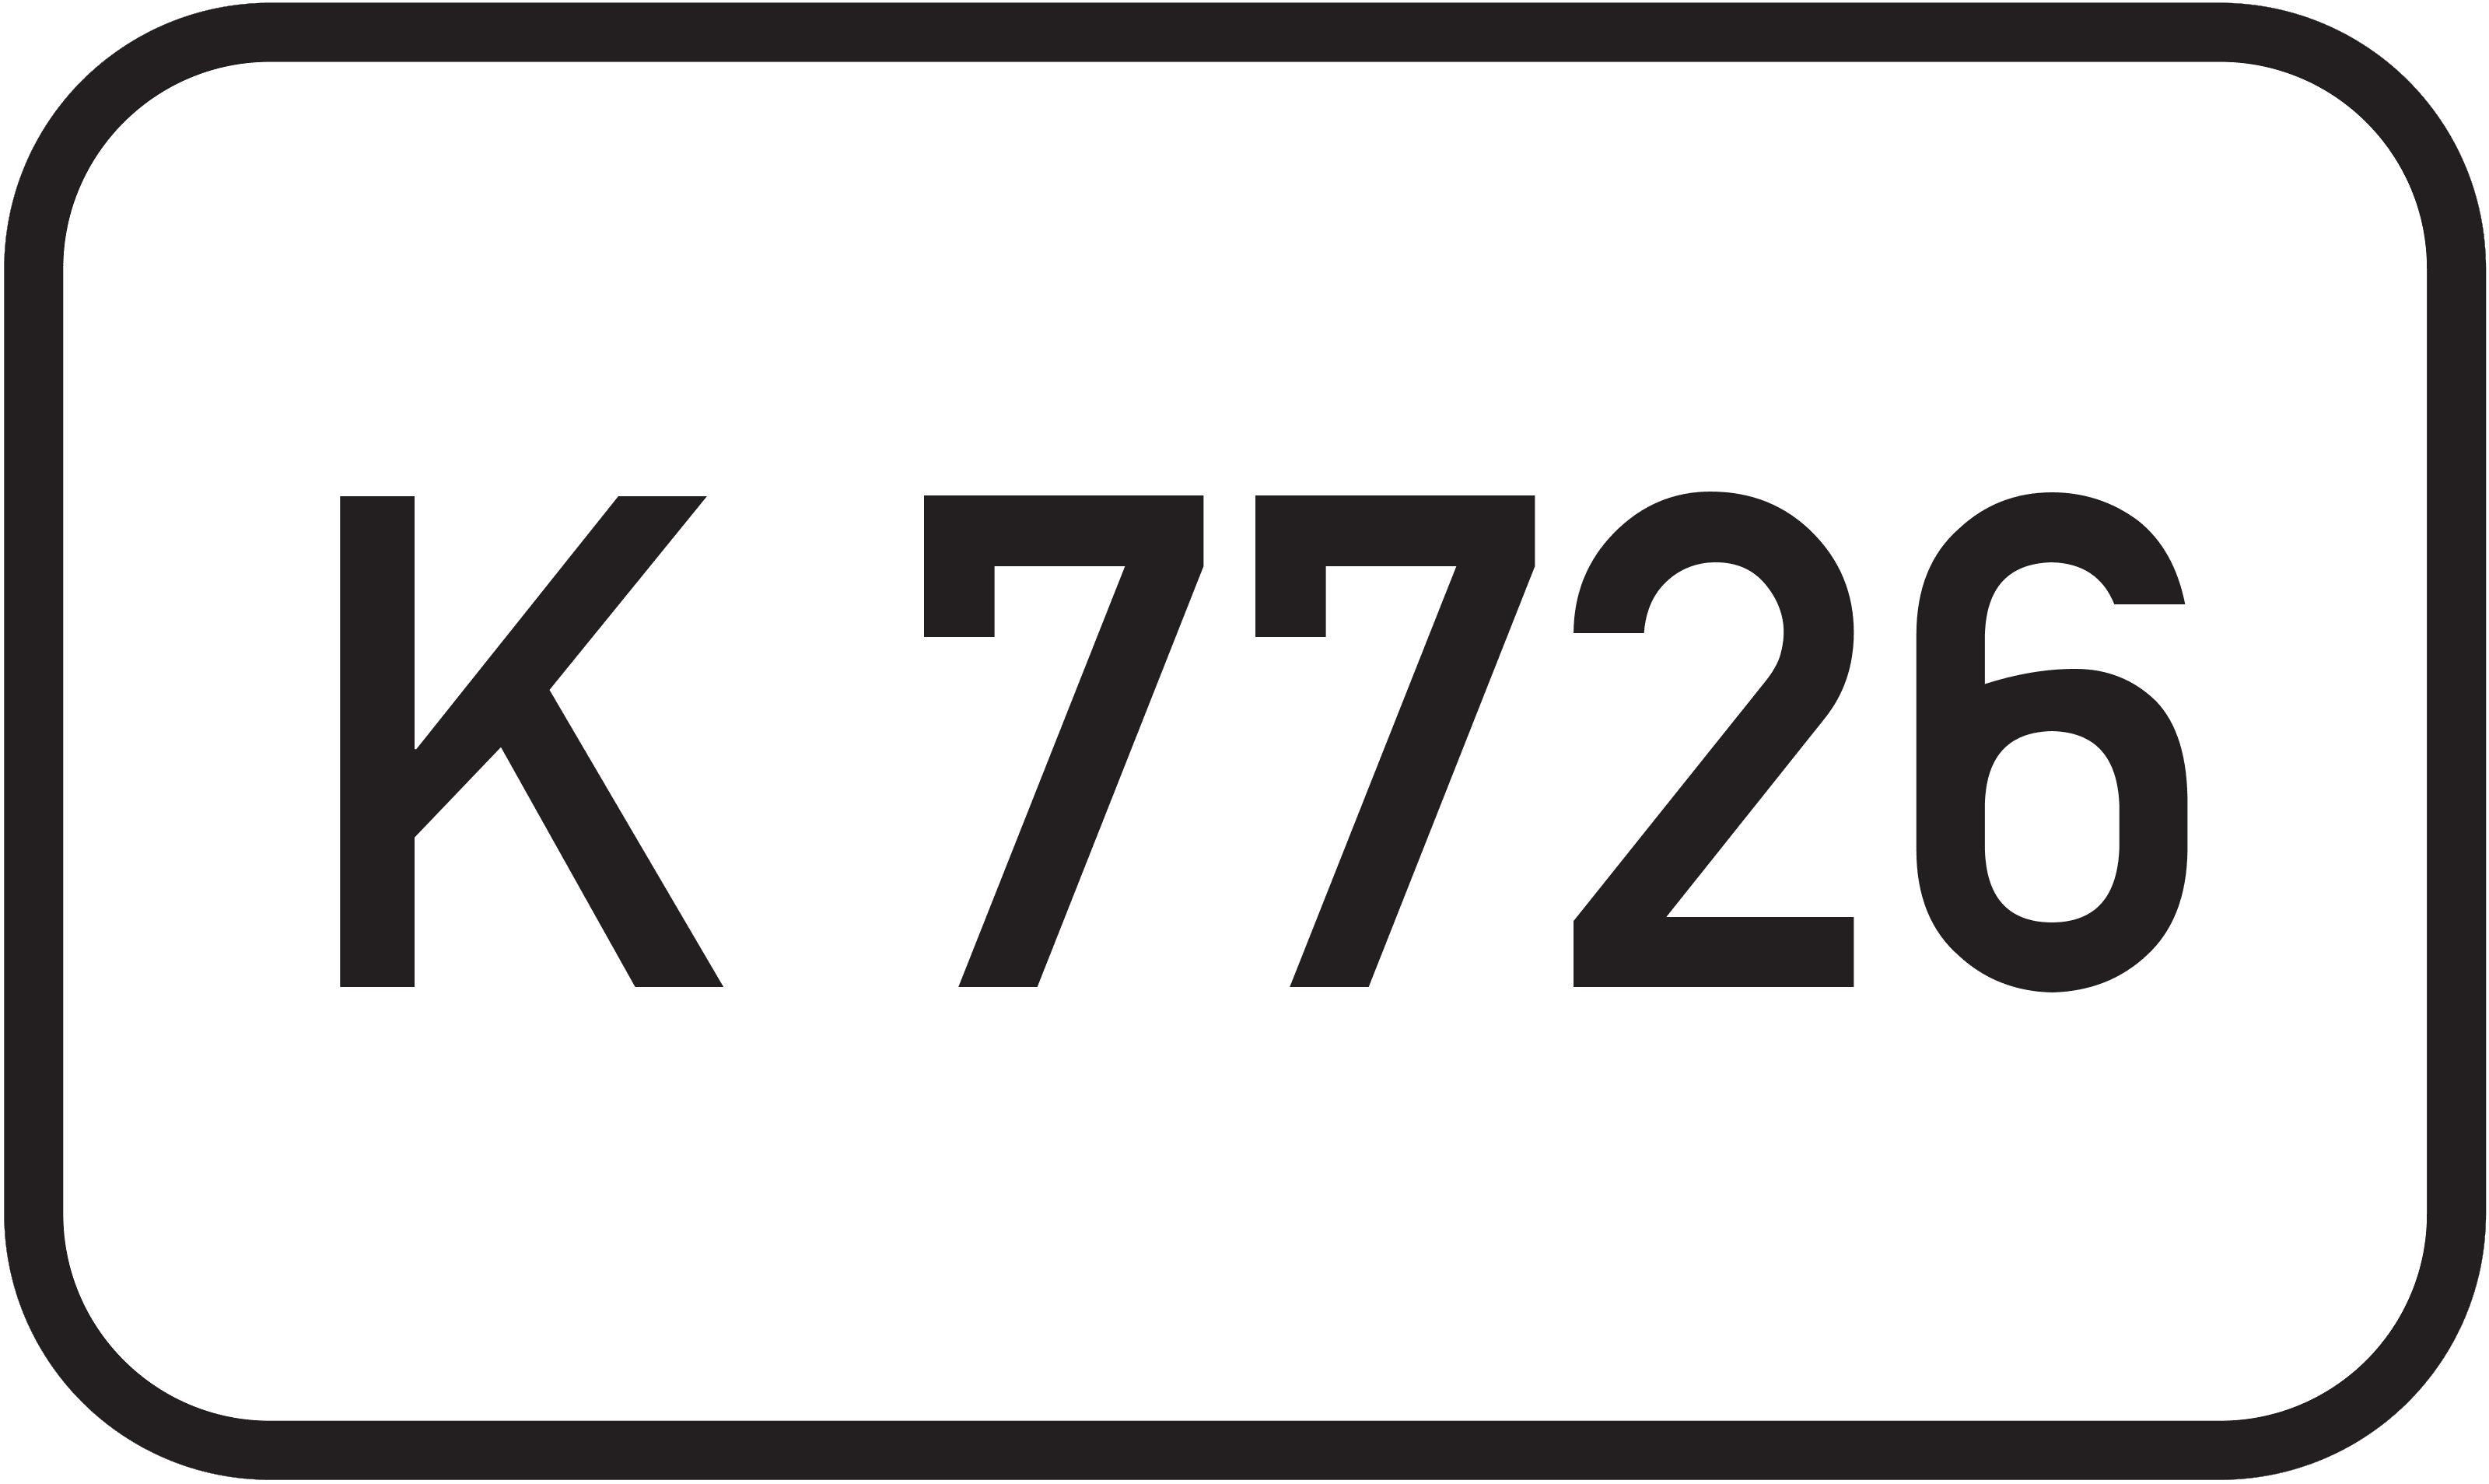 Straßenschild Kreisstraße K 7726